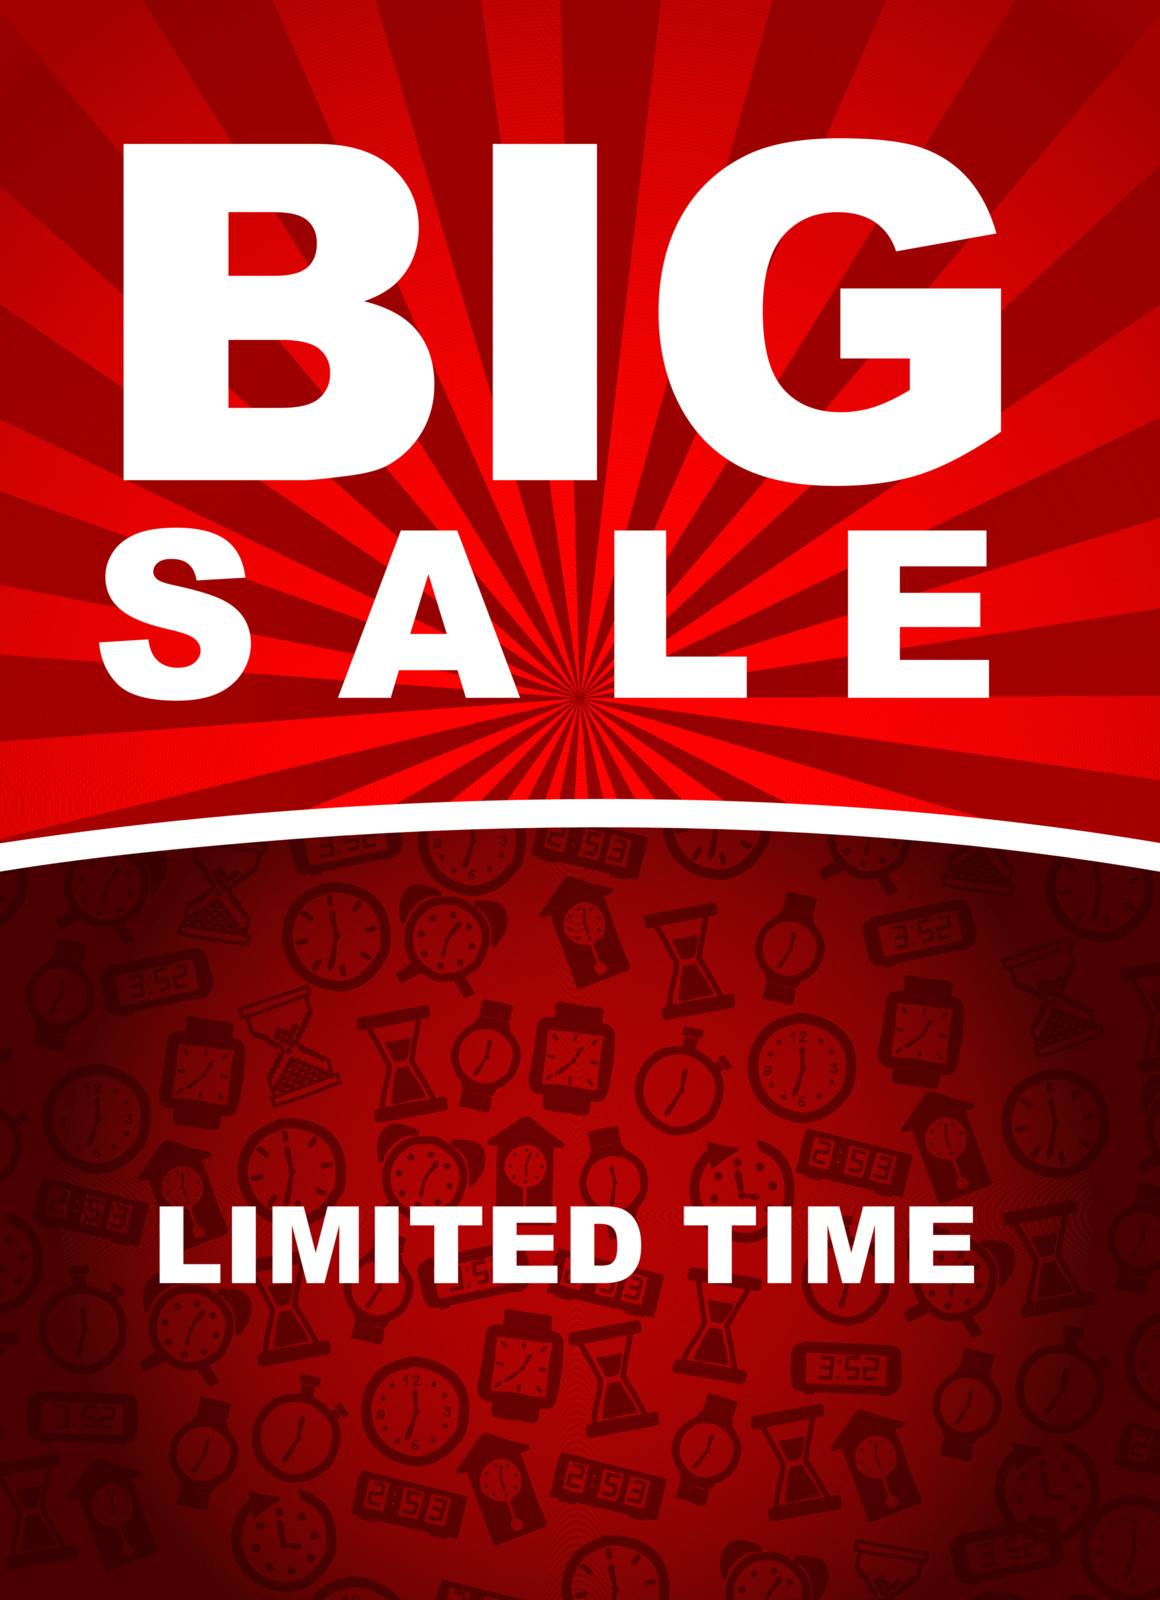 Big sale by yupiramos